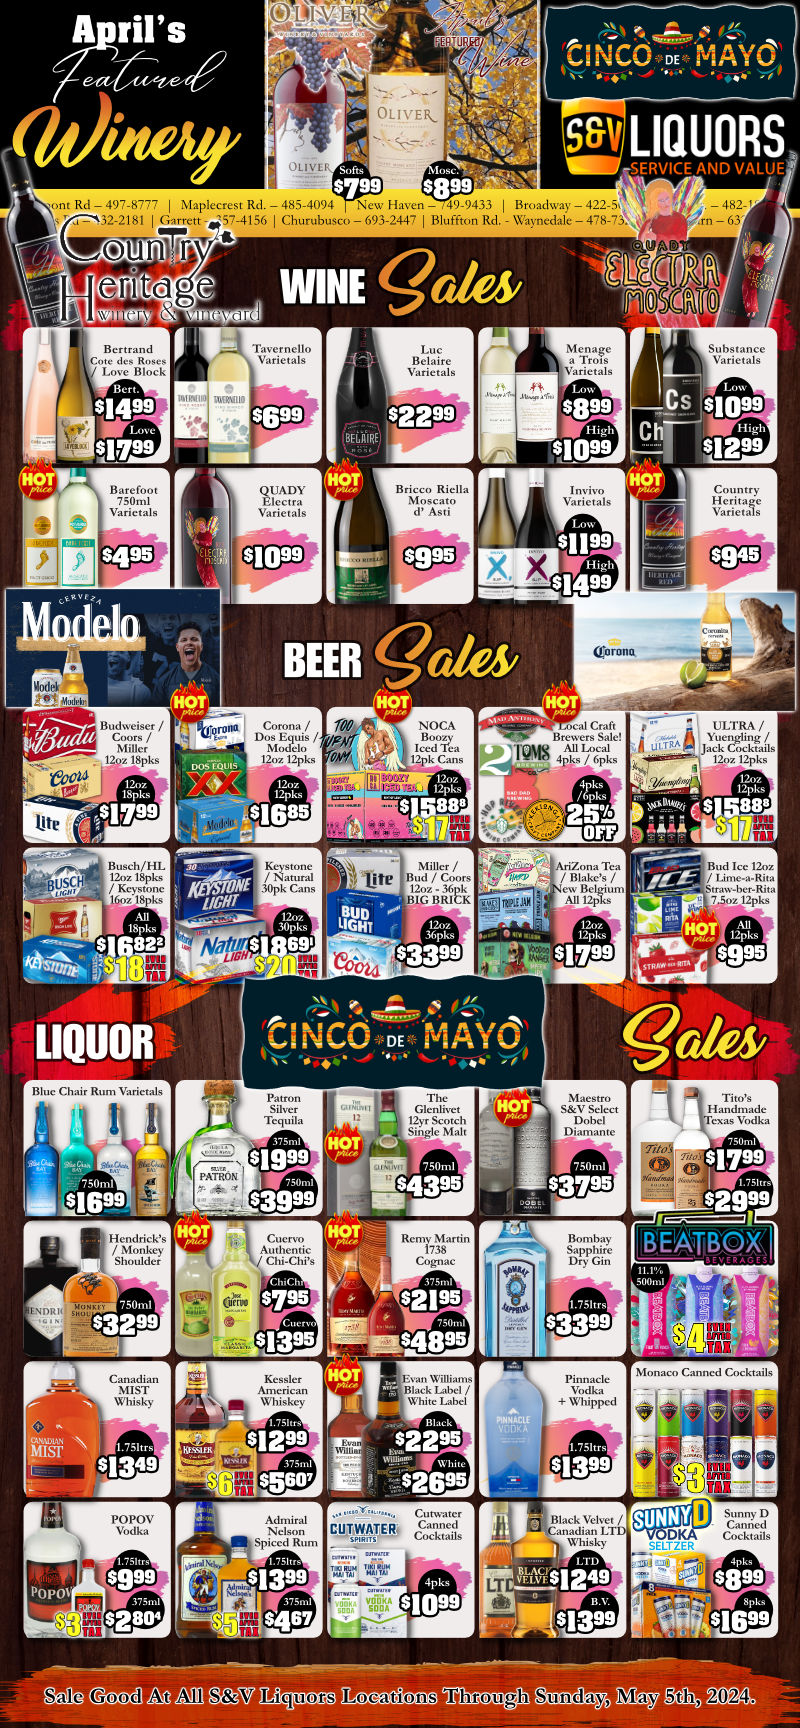 S&V Liquors Weekly Sales Ad for Fort Wayne, New Haven, Garrett, Churubusco, and Woodburn. Beer and Craft Beer, Wine, Spirits, Liquor, Whiskey, Bourbon and more sales available weekly at Fort Wayne's Home for Service & Value ~ S&V Liquors!